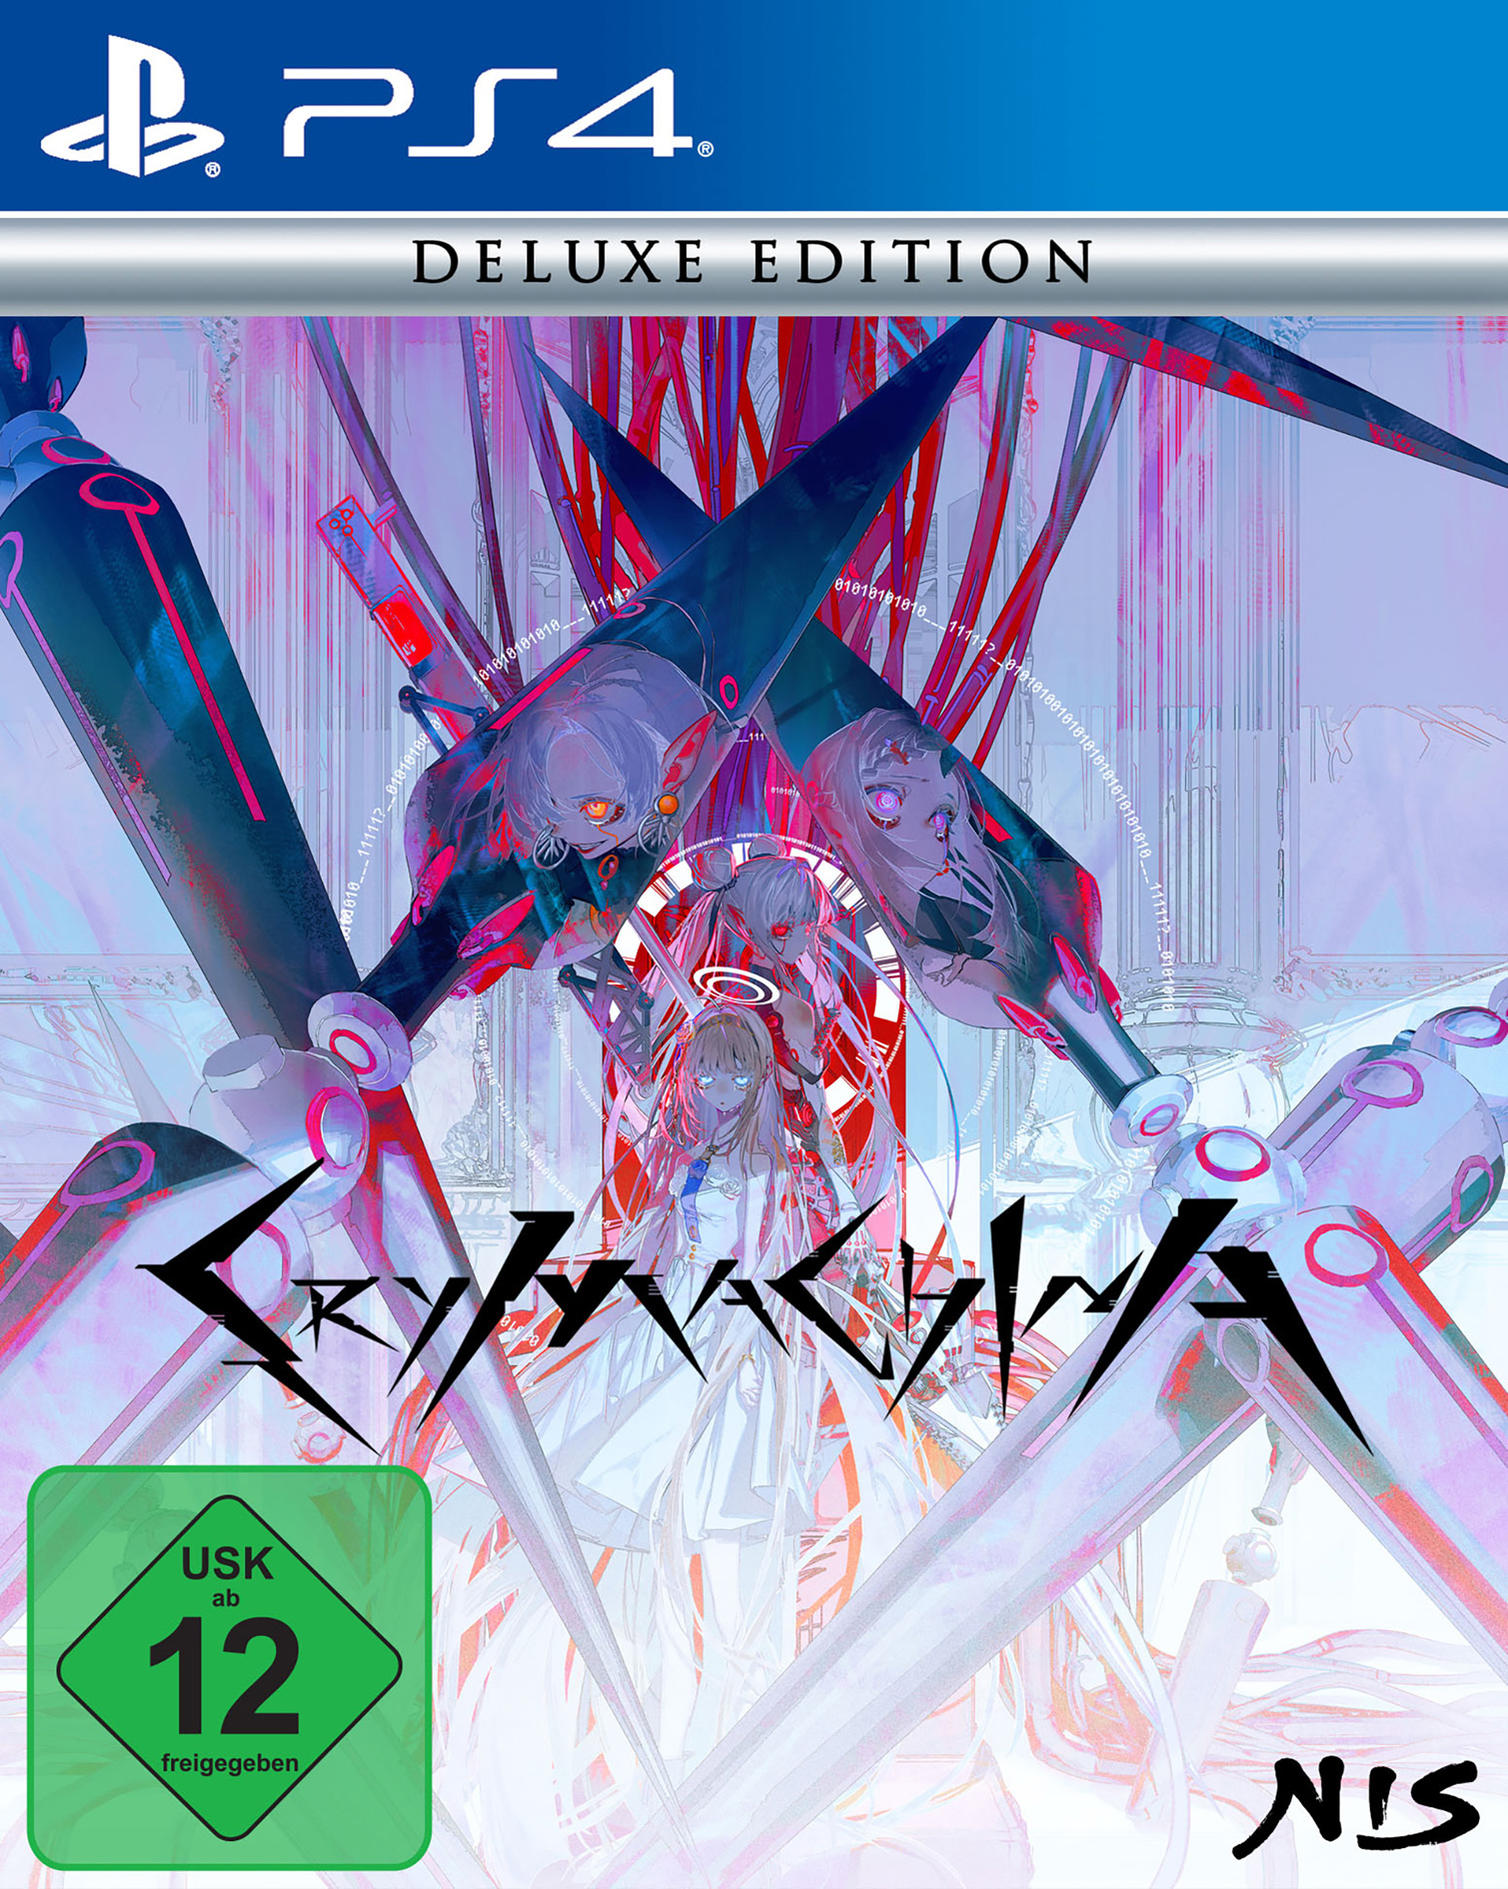 Edition Deluxe - - 4] CRYMACHINA [PlayStation